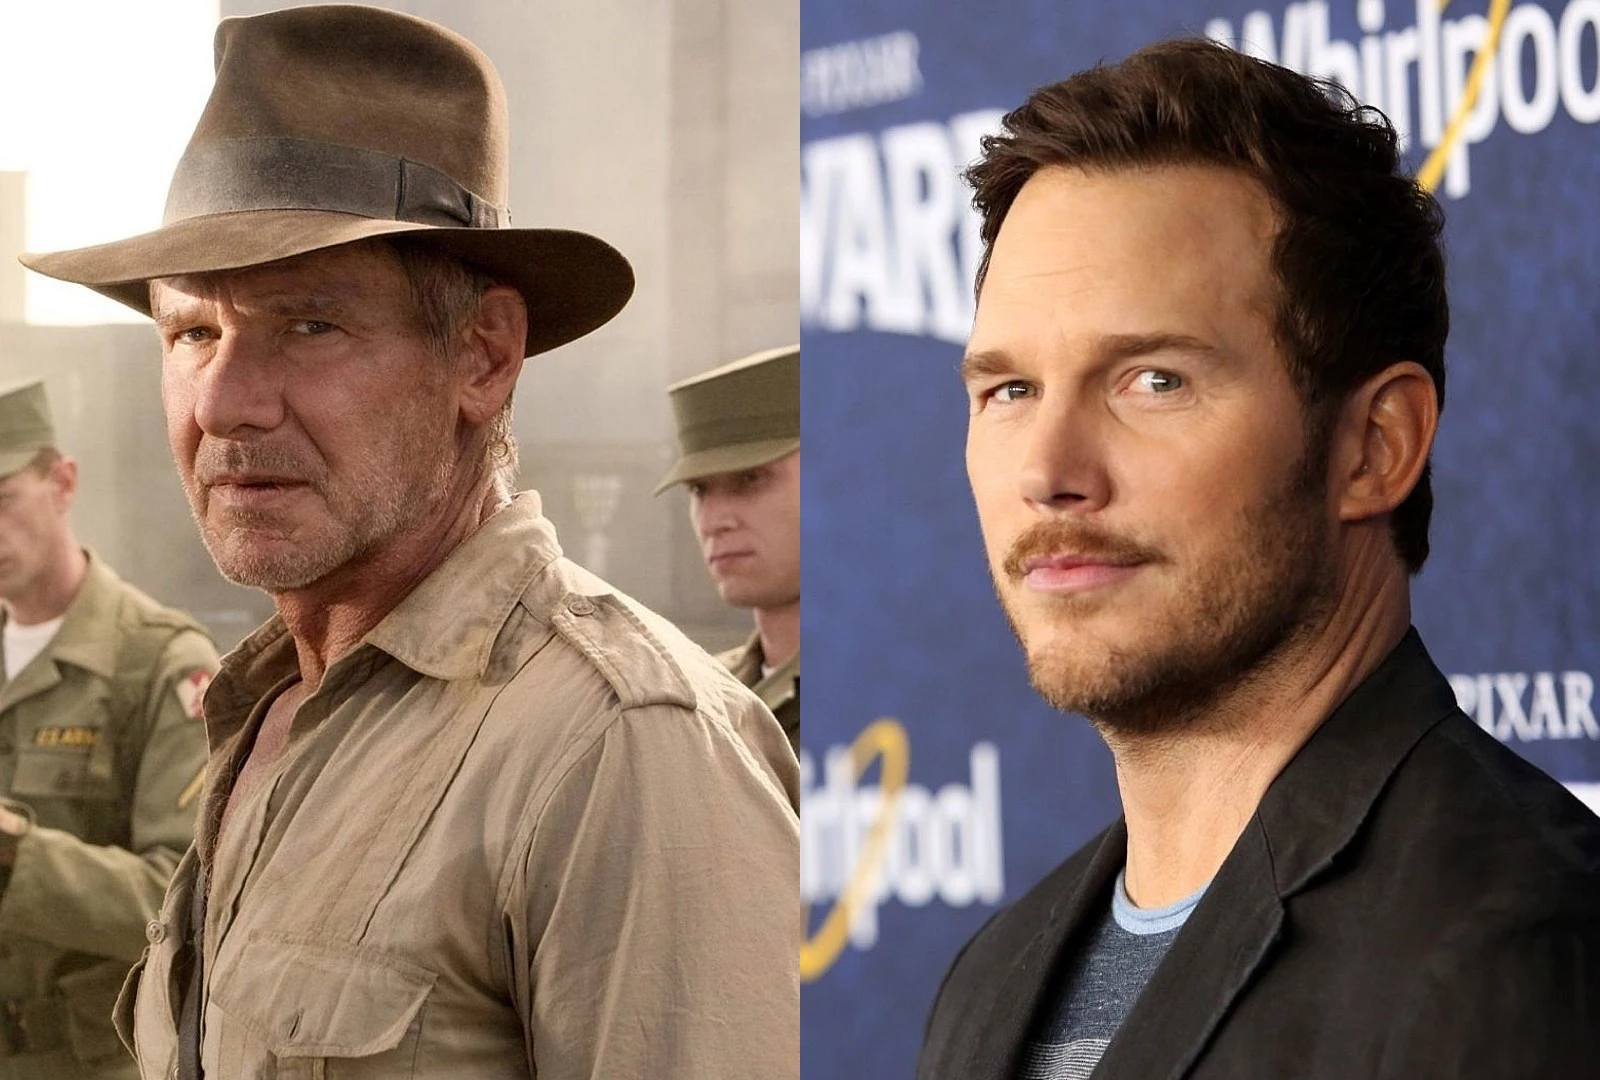 Chris Pratt Says He's Not Going to Play Indiana Jones